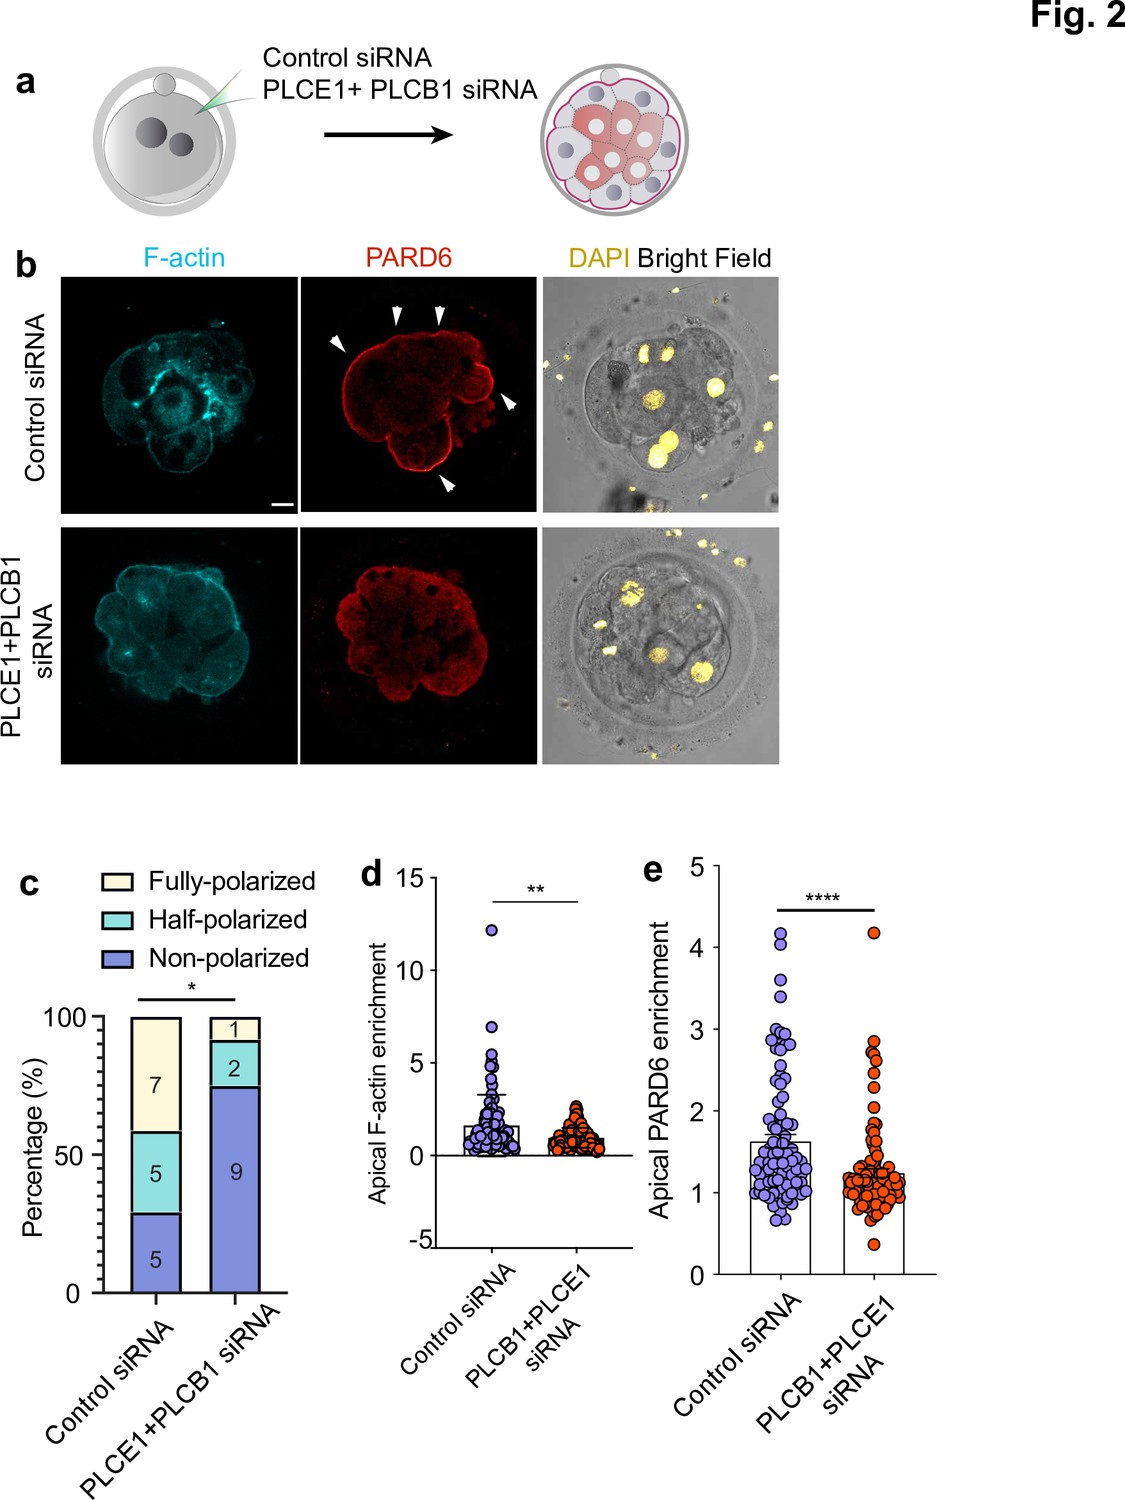 Human embryo polarization requires PLC signaling to mediate